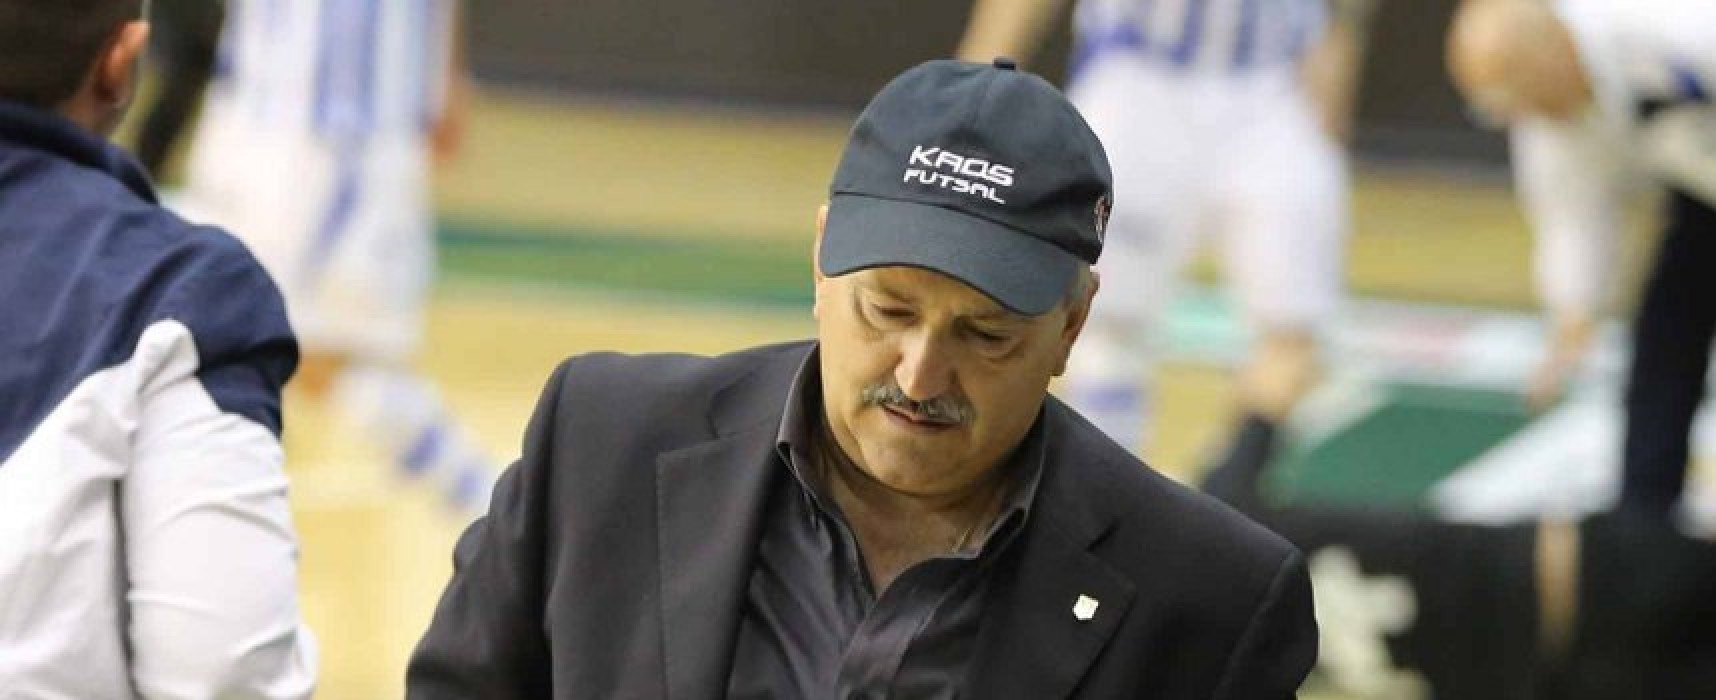 Mister Capurso confermato al Kaos Futsal